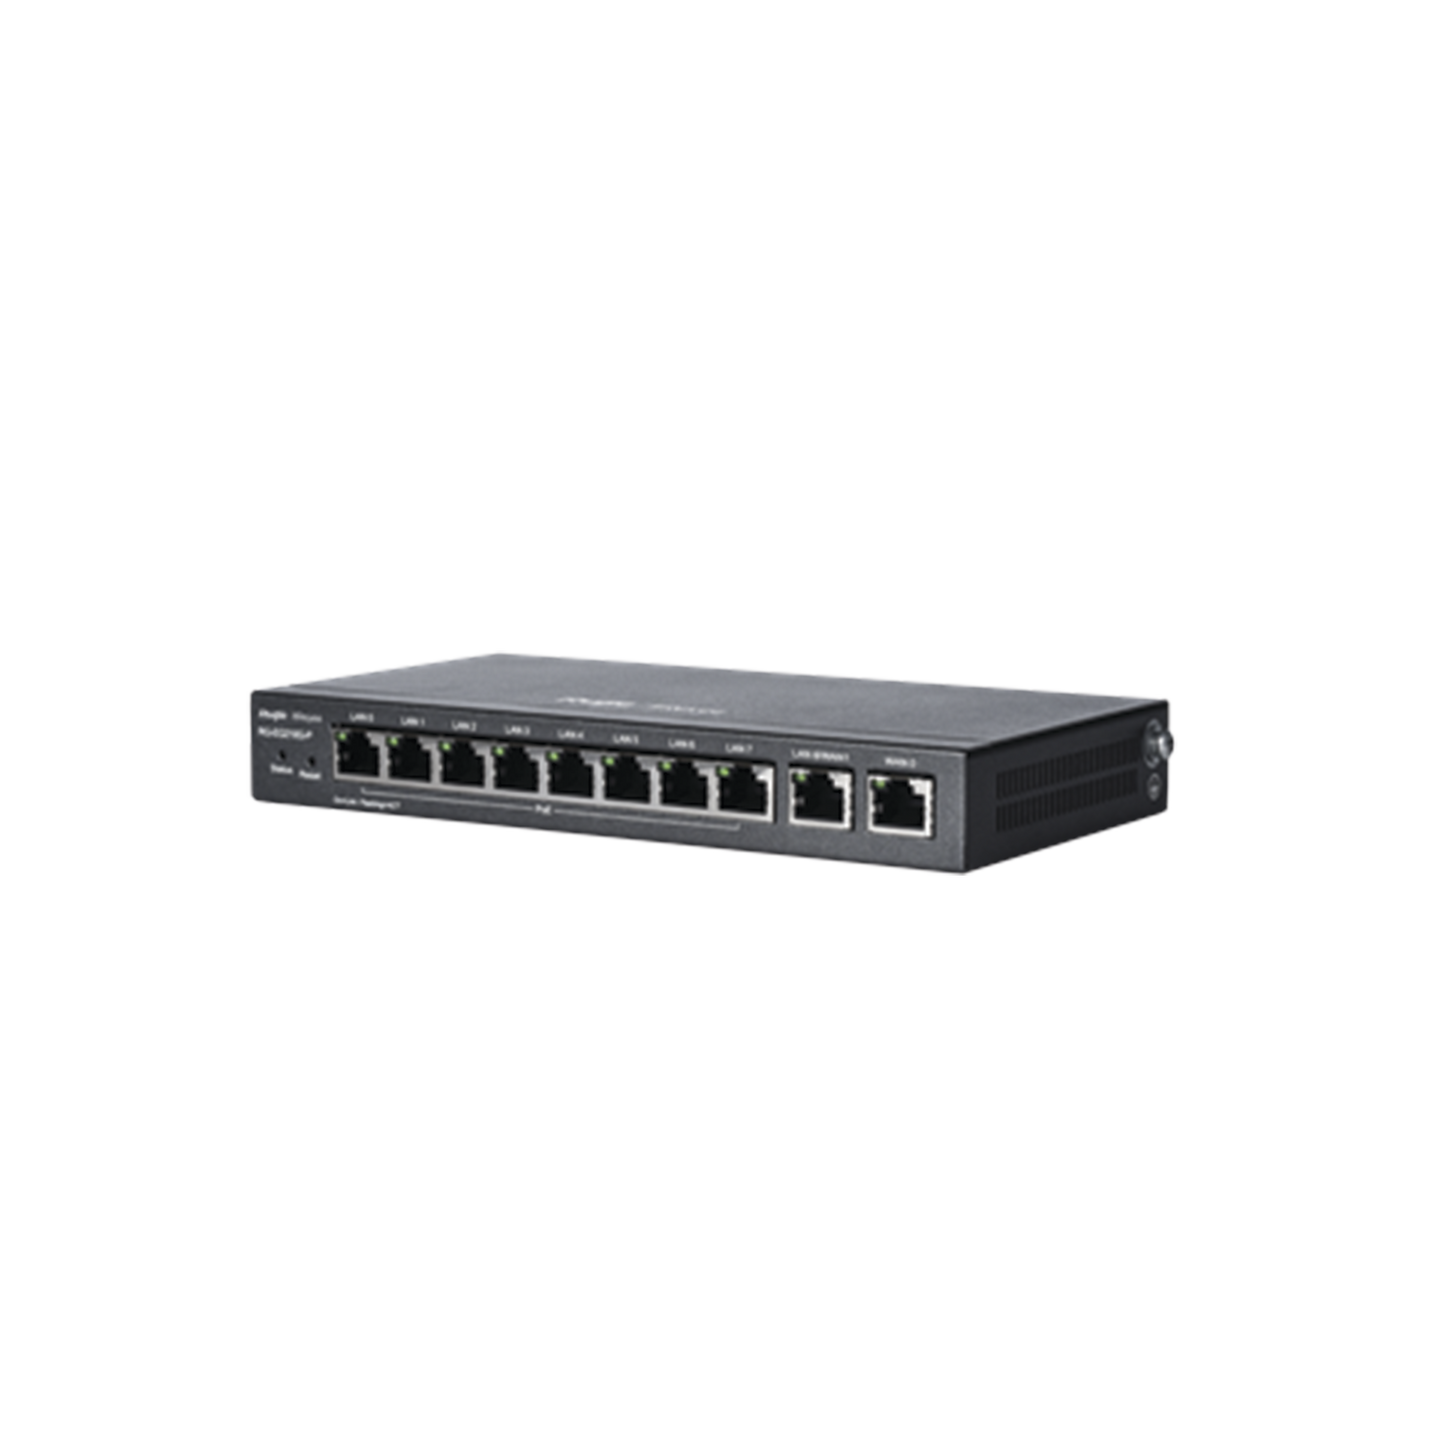 Router Balanceador PoE Cloud 10 puertos gigabit (8 puertos PoE), soporta 4x WAN configurables, hasta 200 clientes con desempeño de 600 Mbps asimétricos